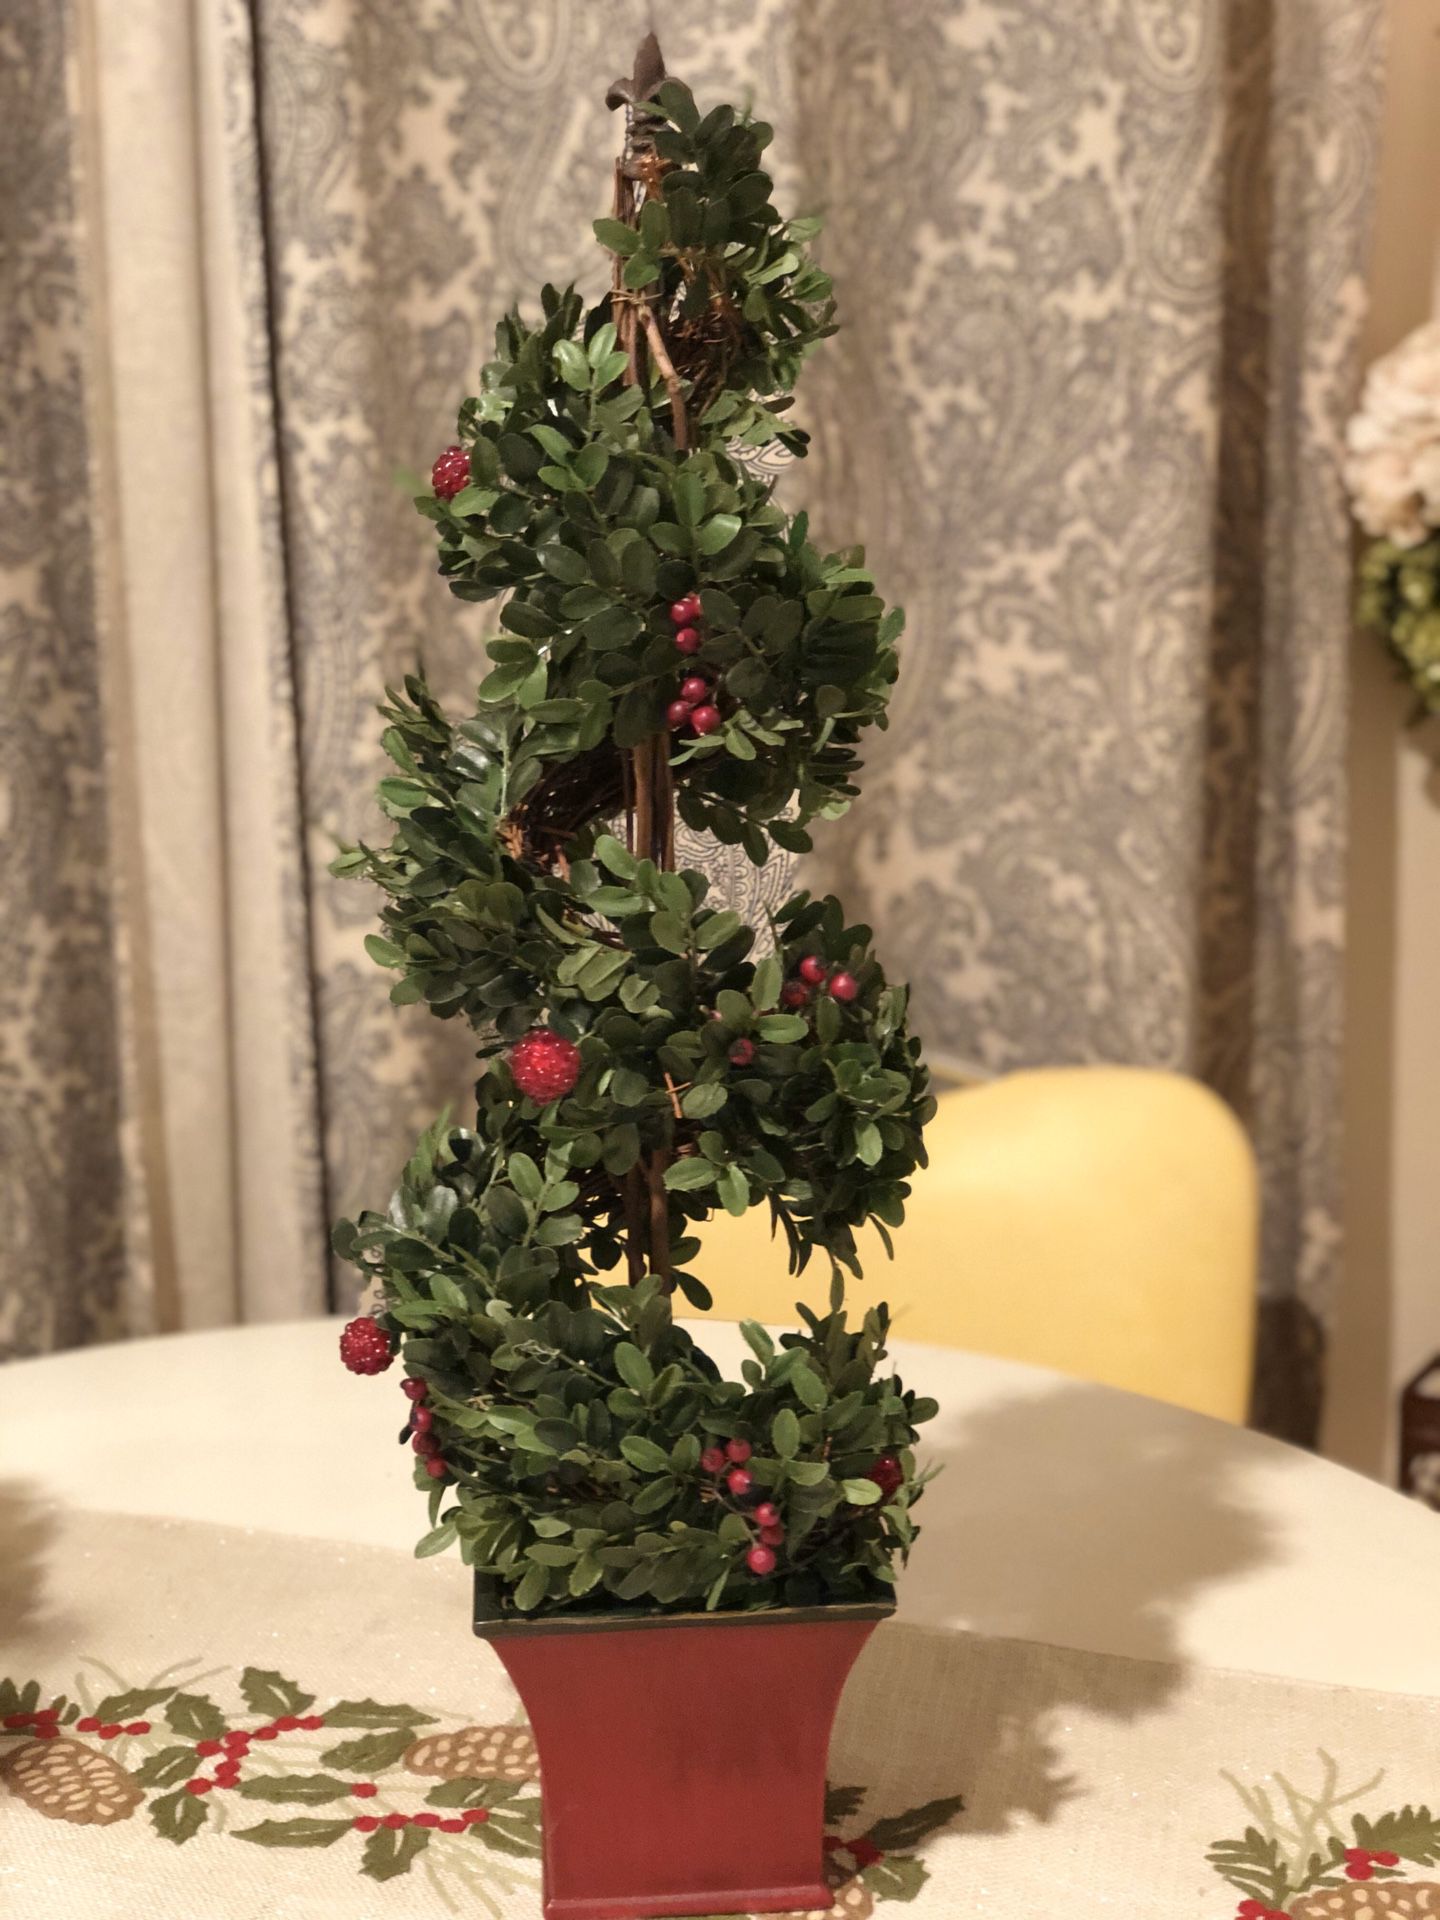 Small decorative Christmas plant